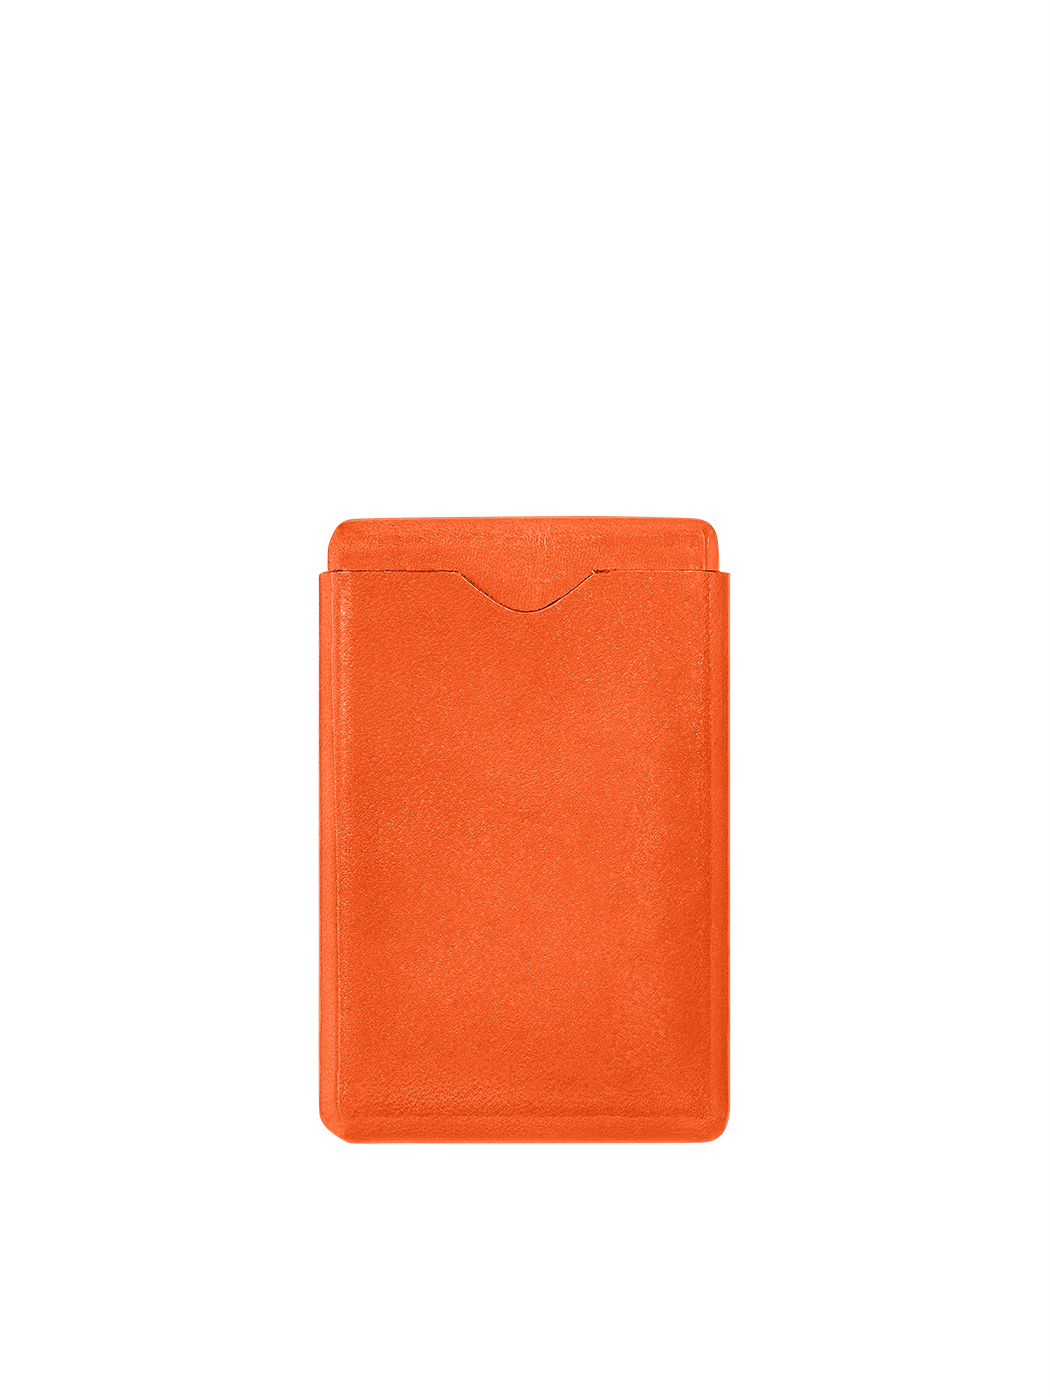 Business Card Holder Molded Leather Orange